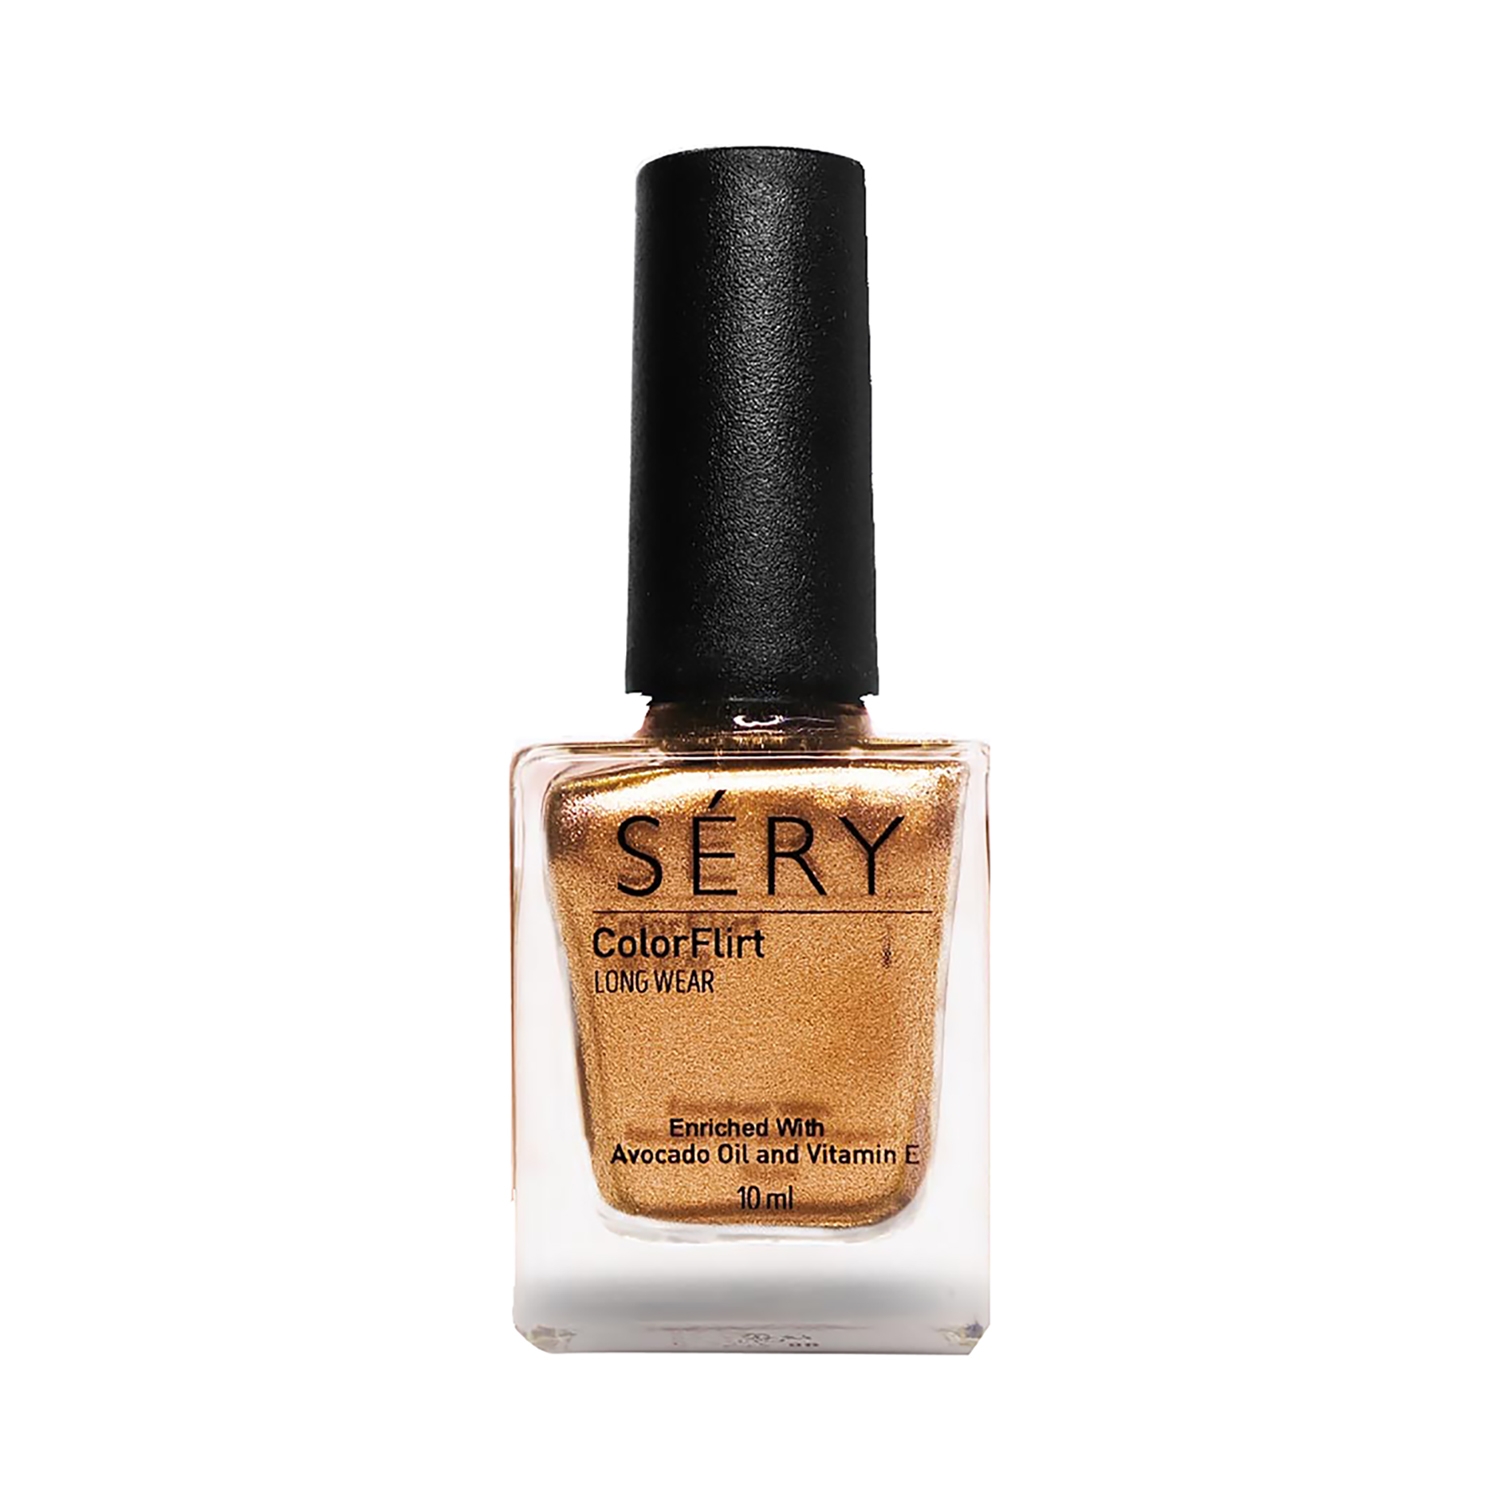 Sery | Sery Colorflirt Nail Polish - Embellished (10ml)